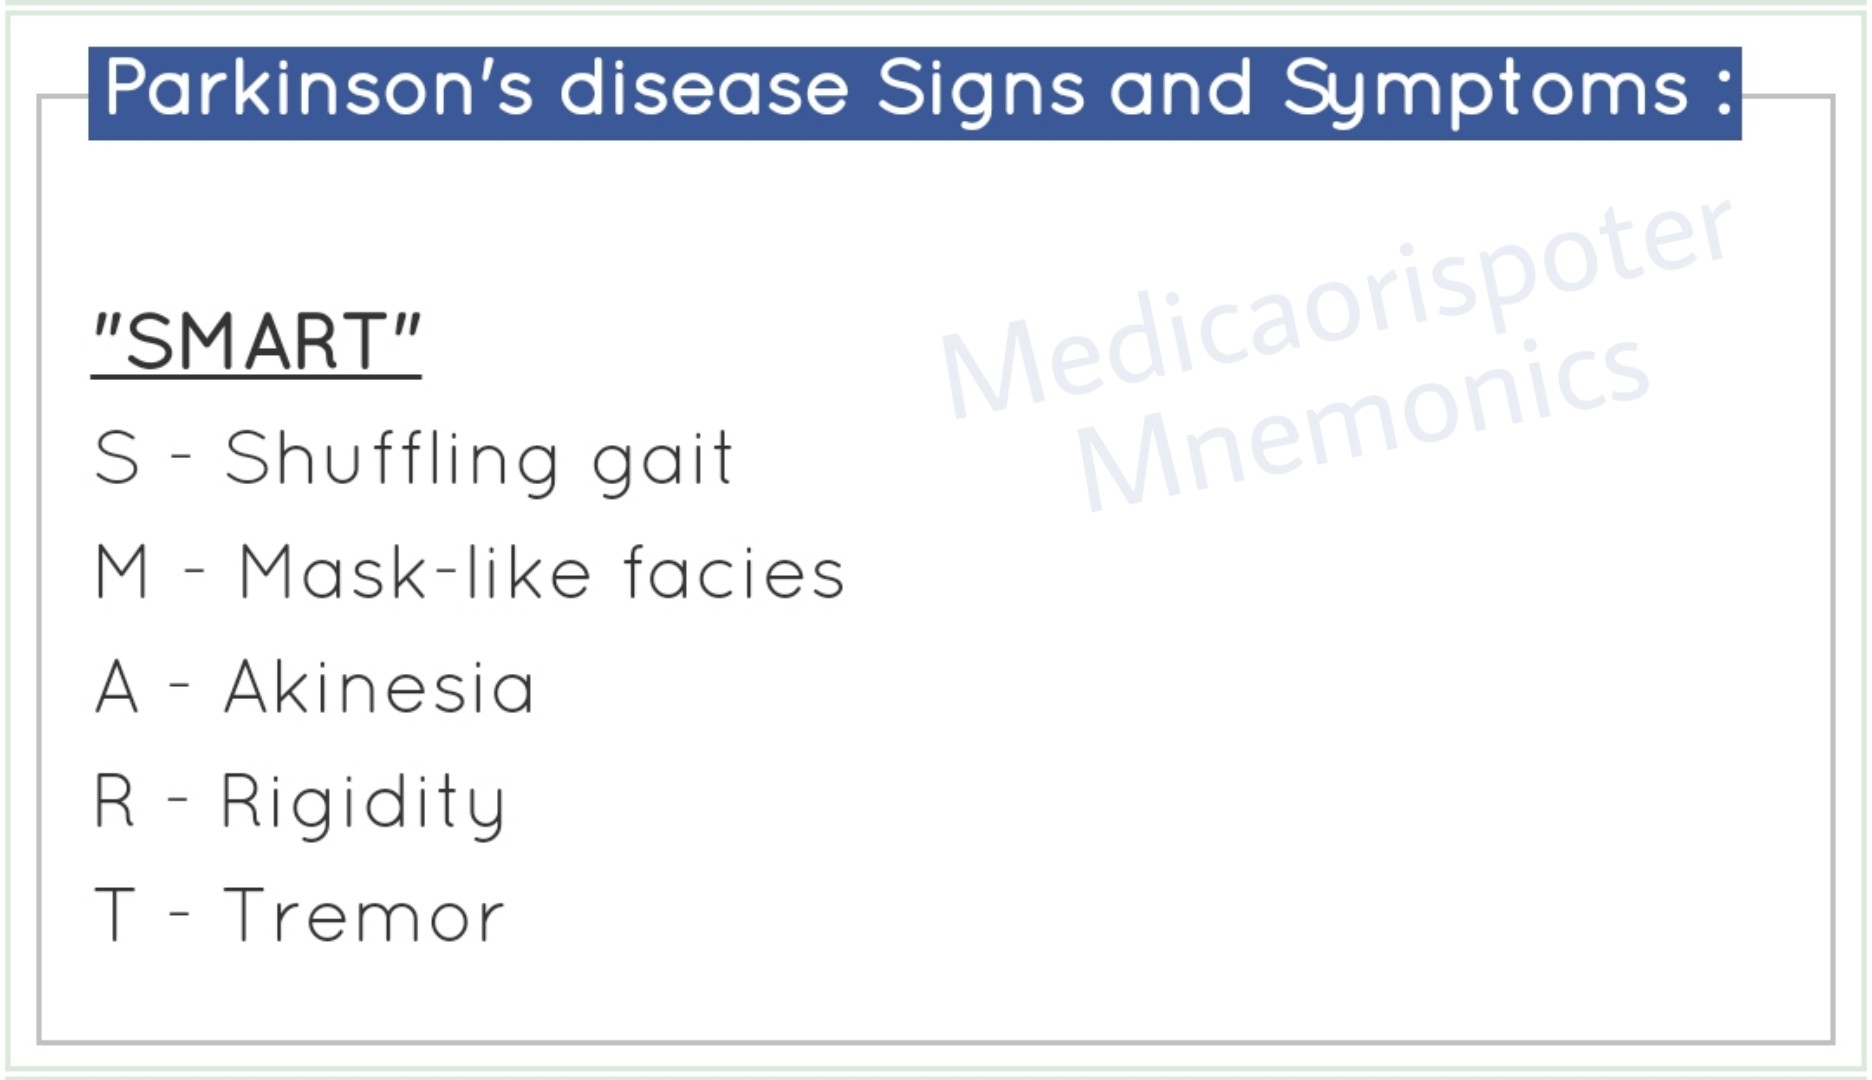 Parkinsons Disease Signs and Symptoms